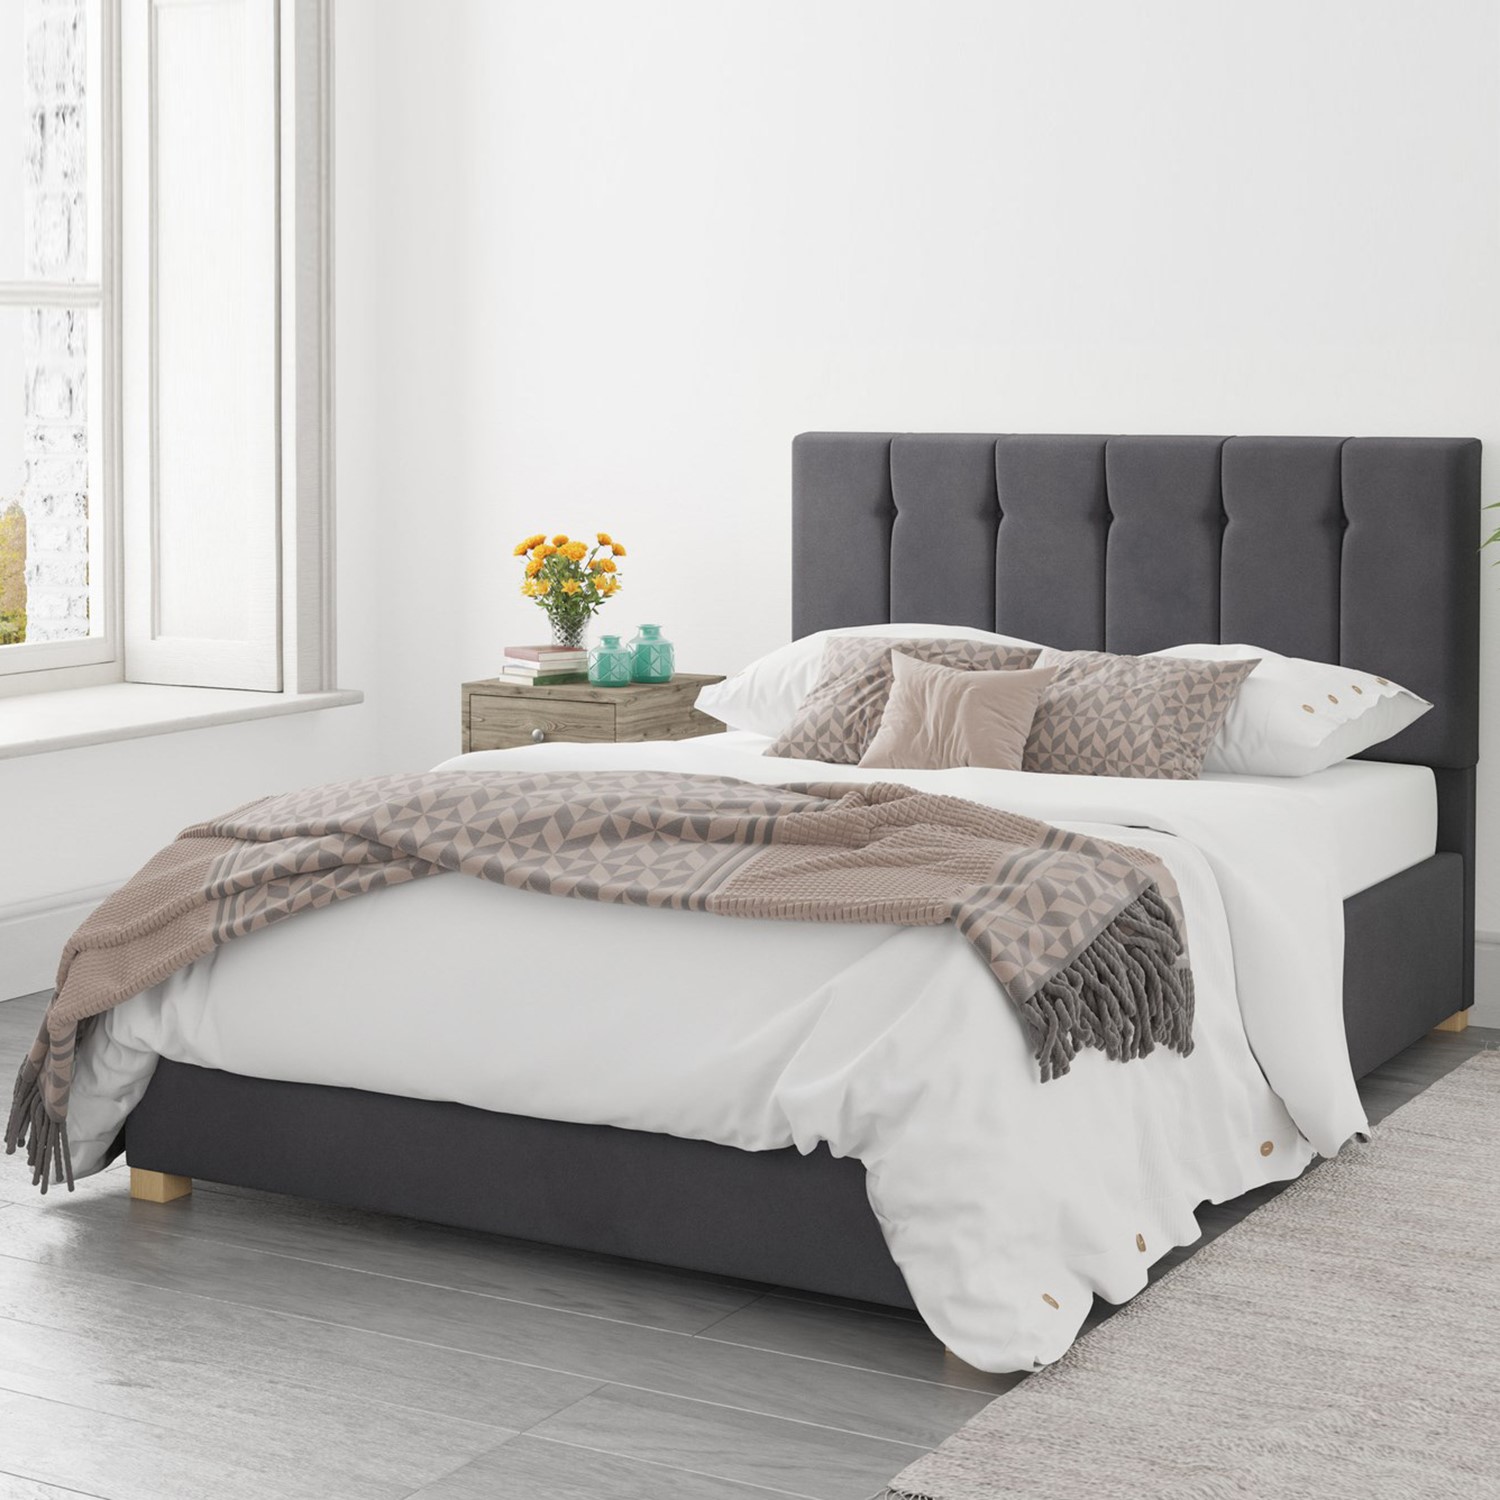 Read more about Grey velvet double ottoman bed pimilico aspire